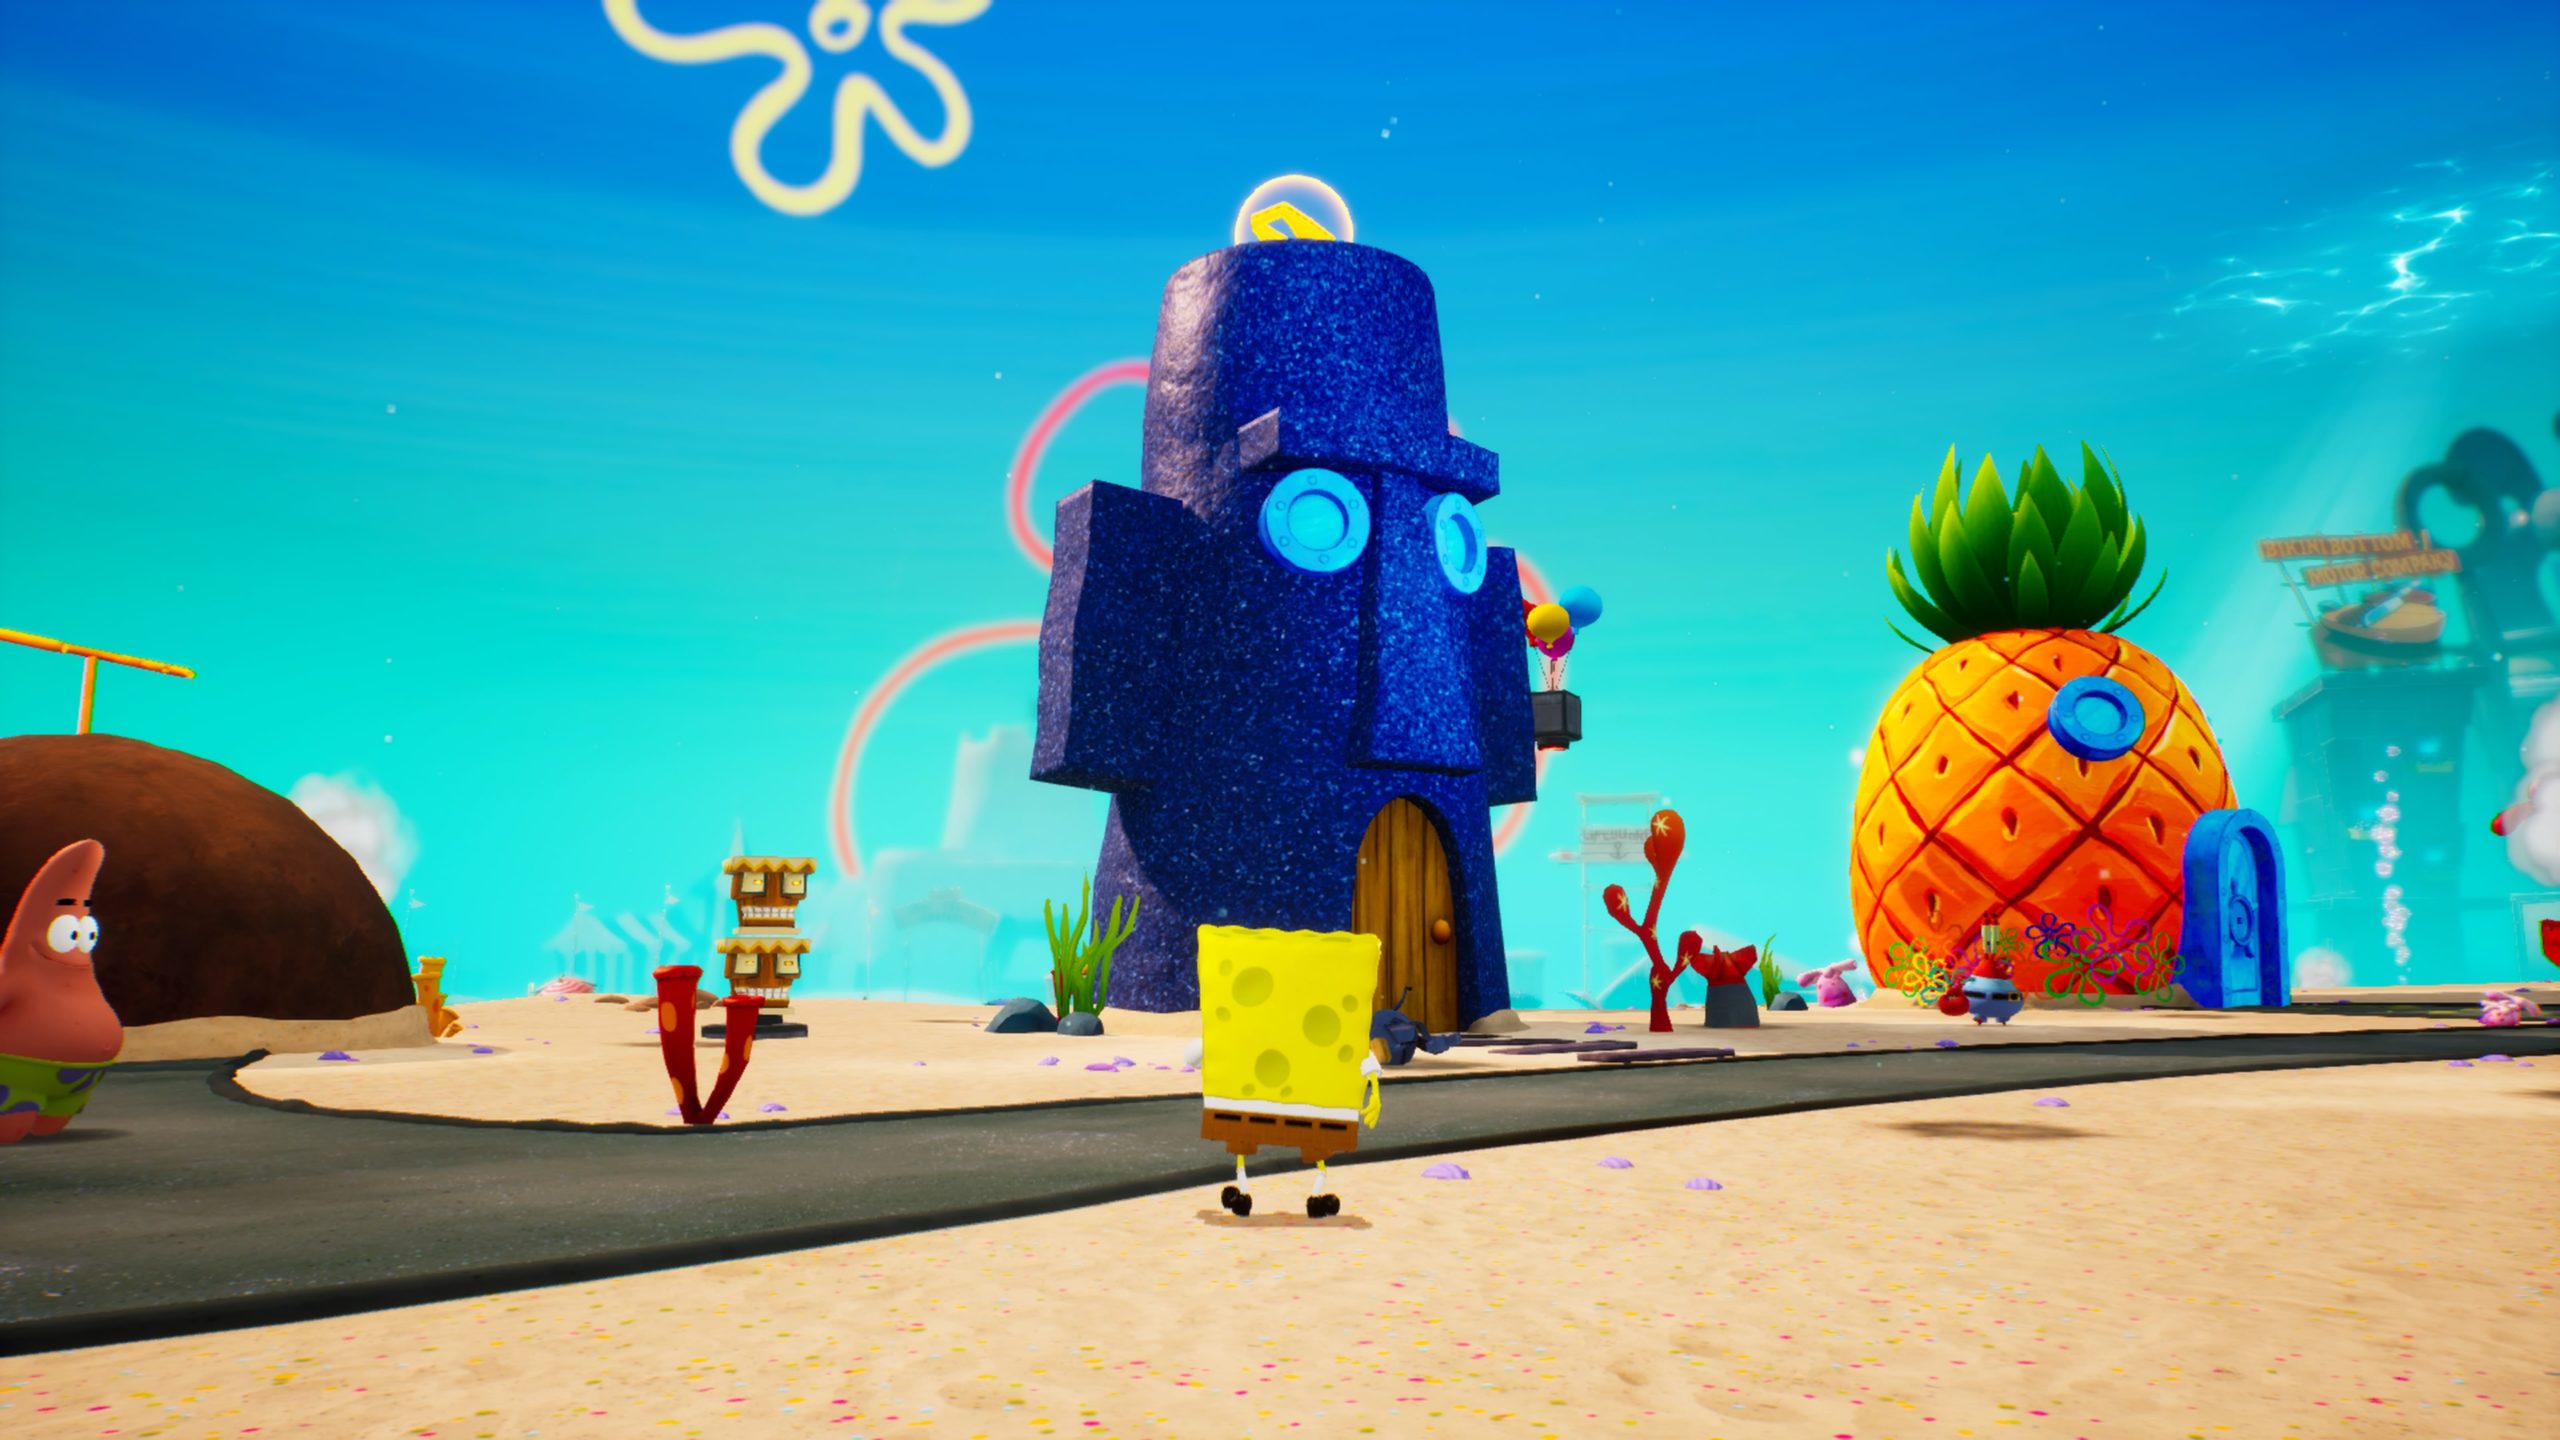 How to get to spongebob's dream battle for bikini bottom